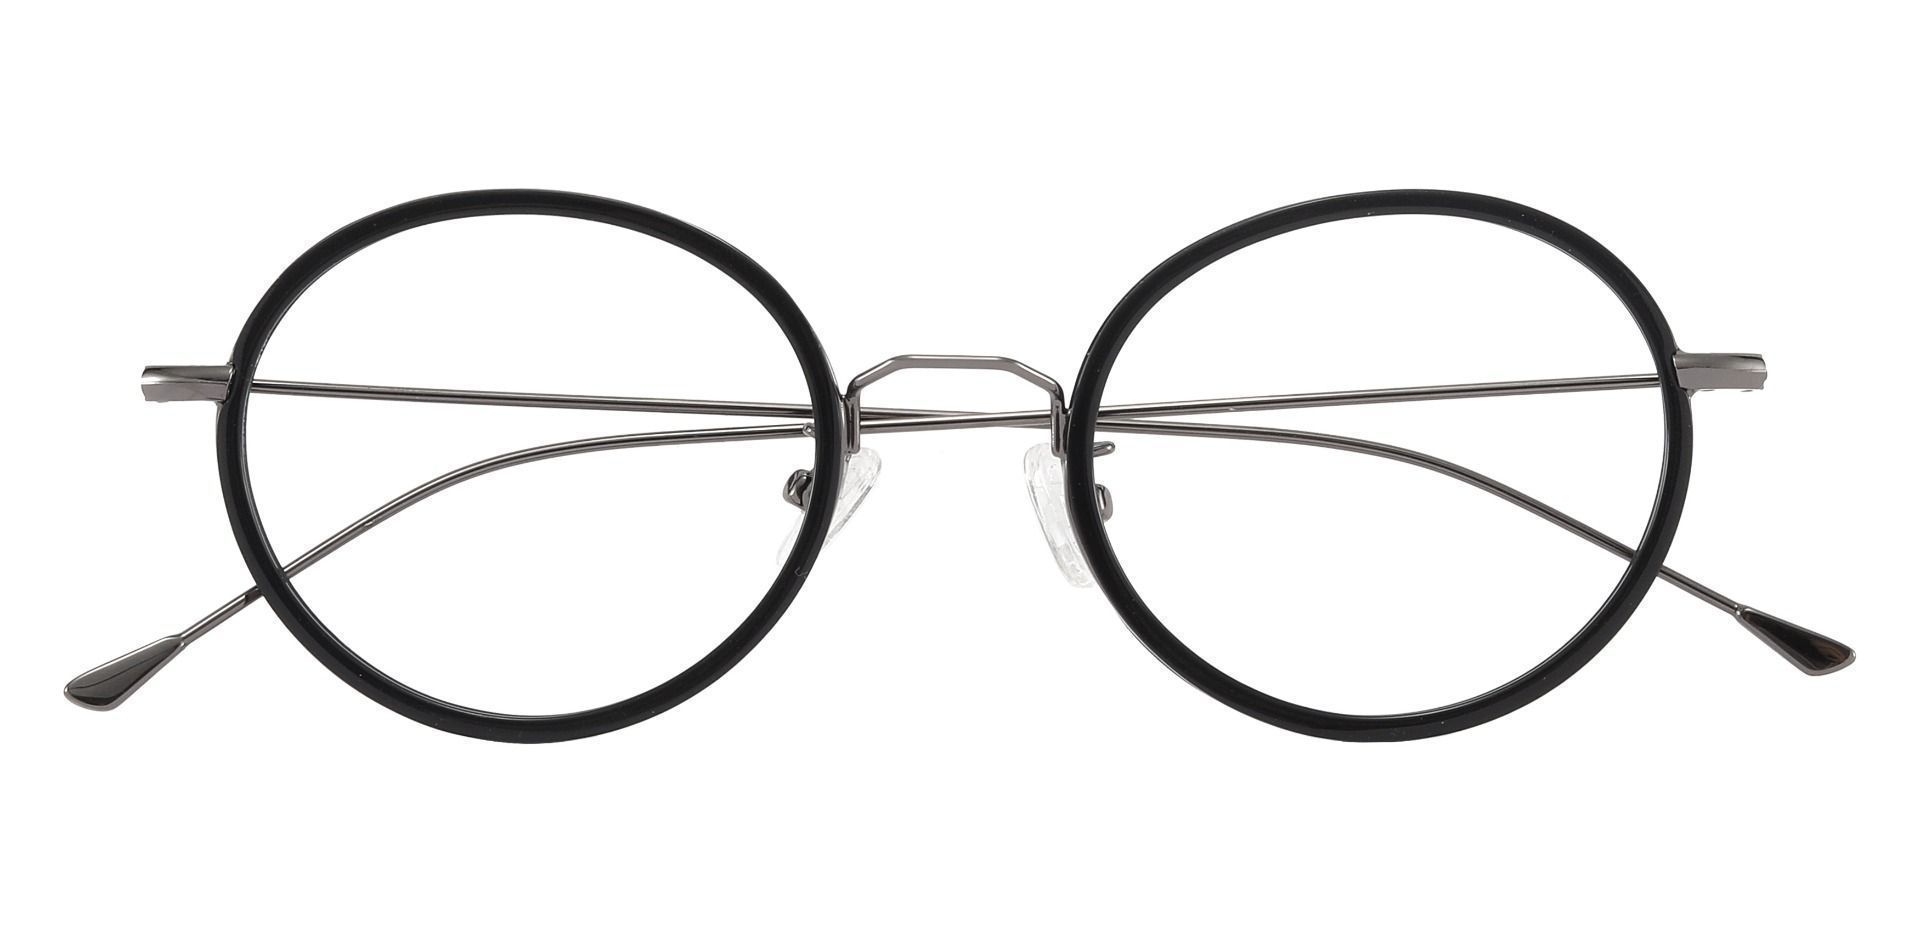 Malverne Oval Prescription Glasses - Black